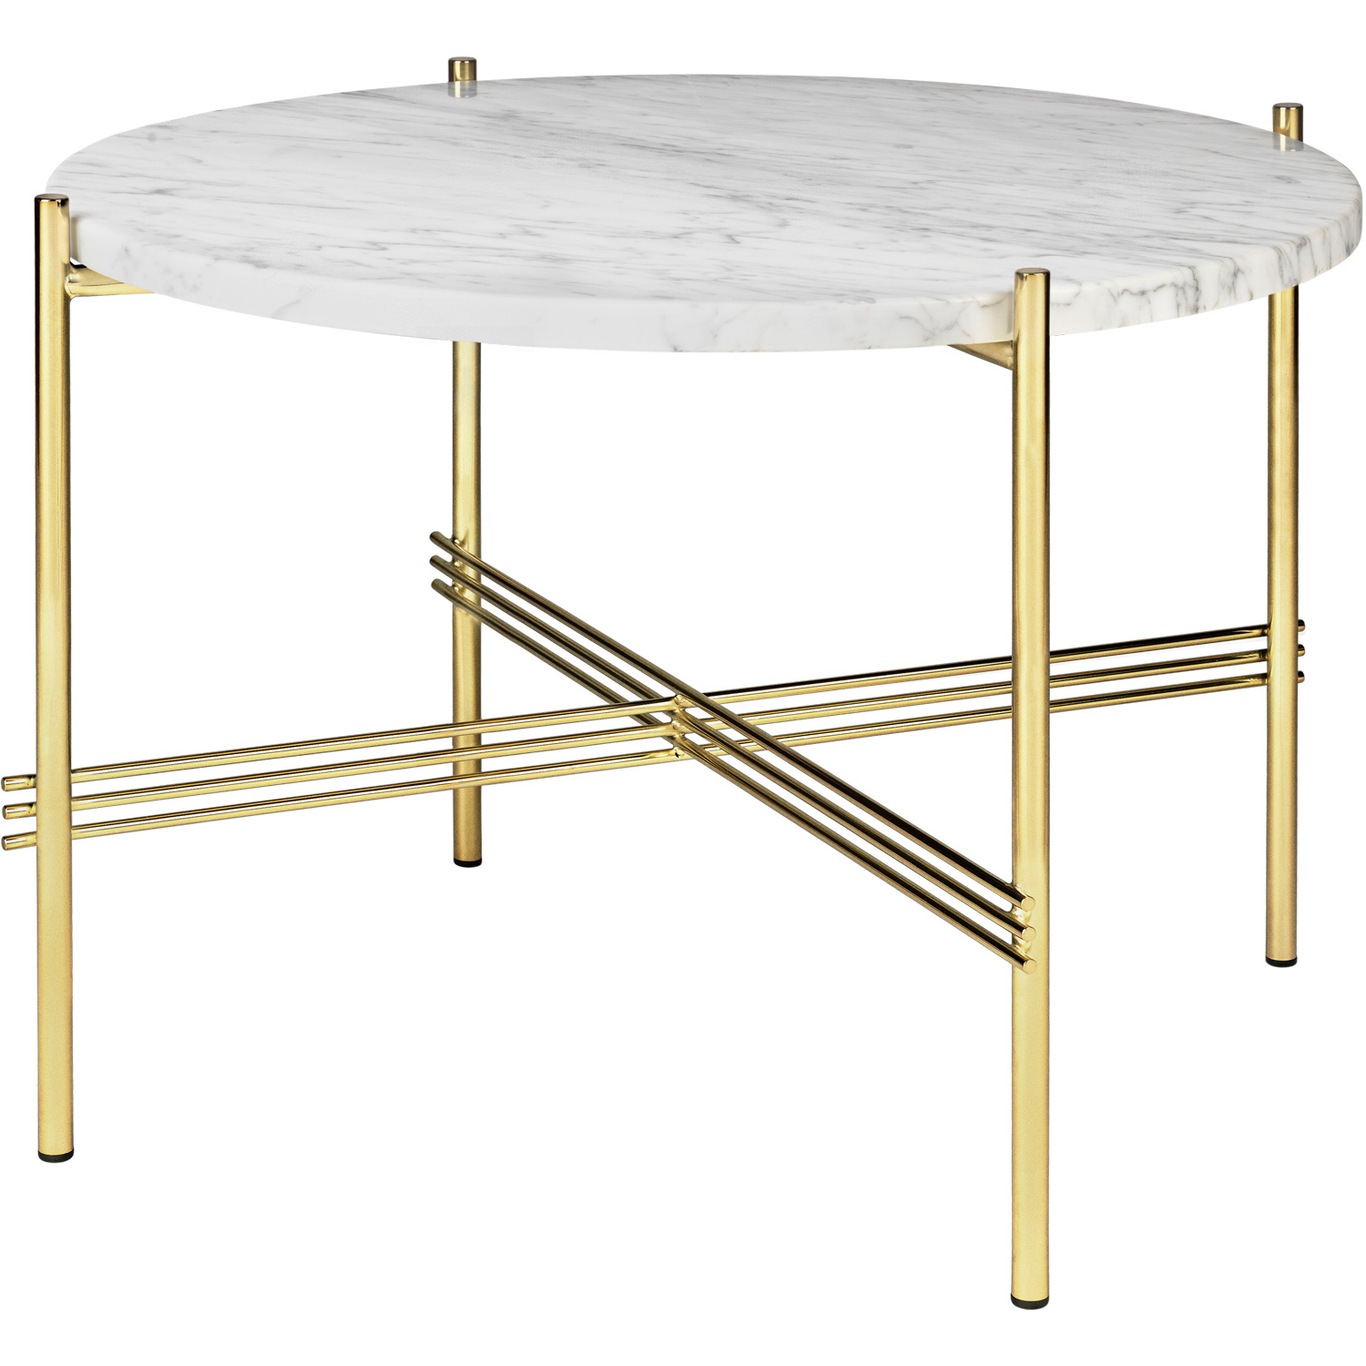 TS Coffee Table 55 cm, Brass / Neutral white Travertine